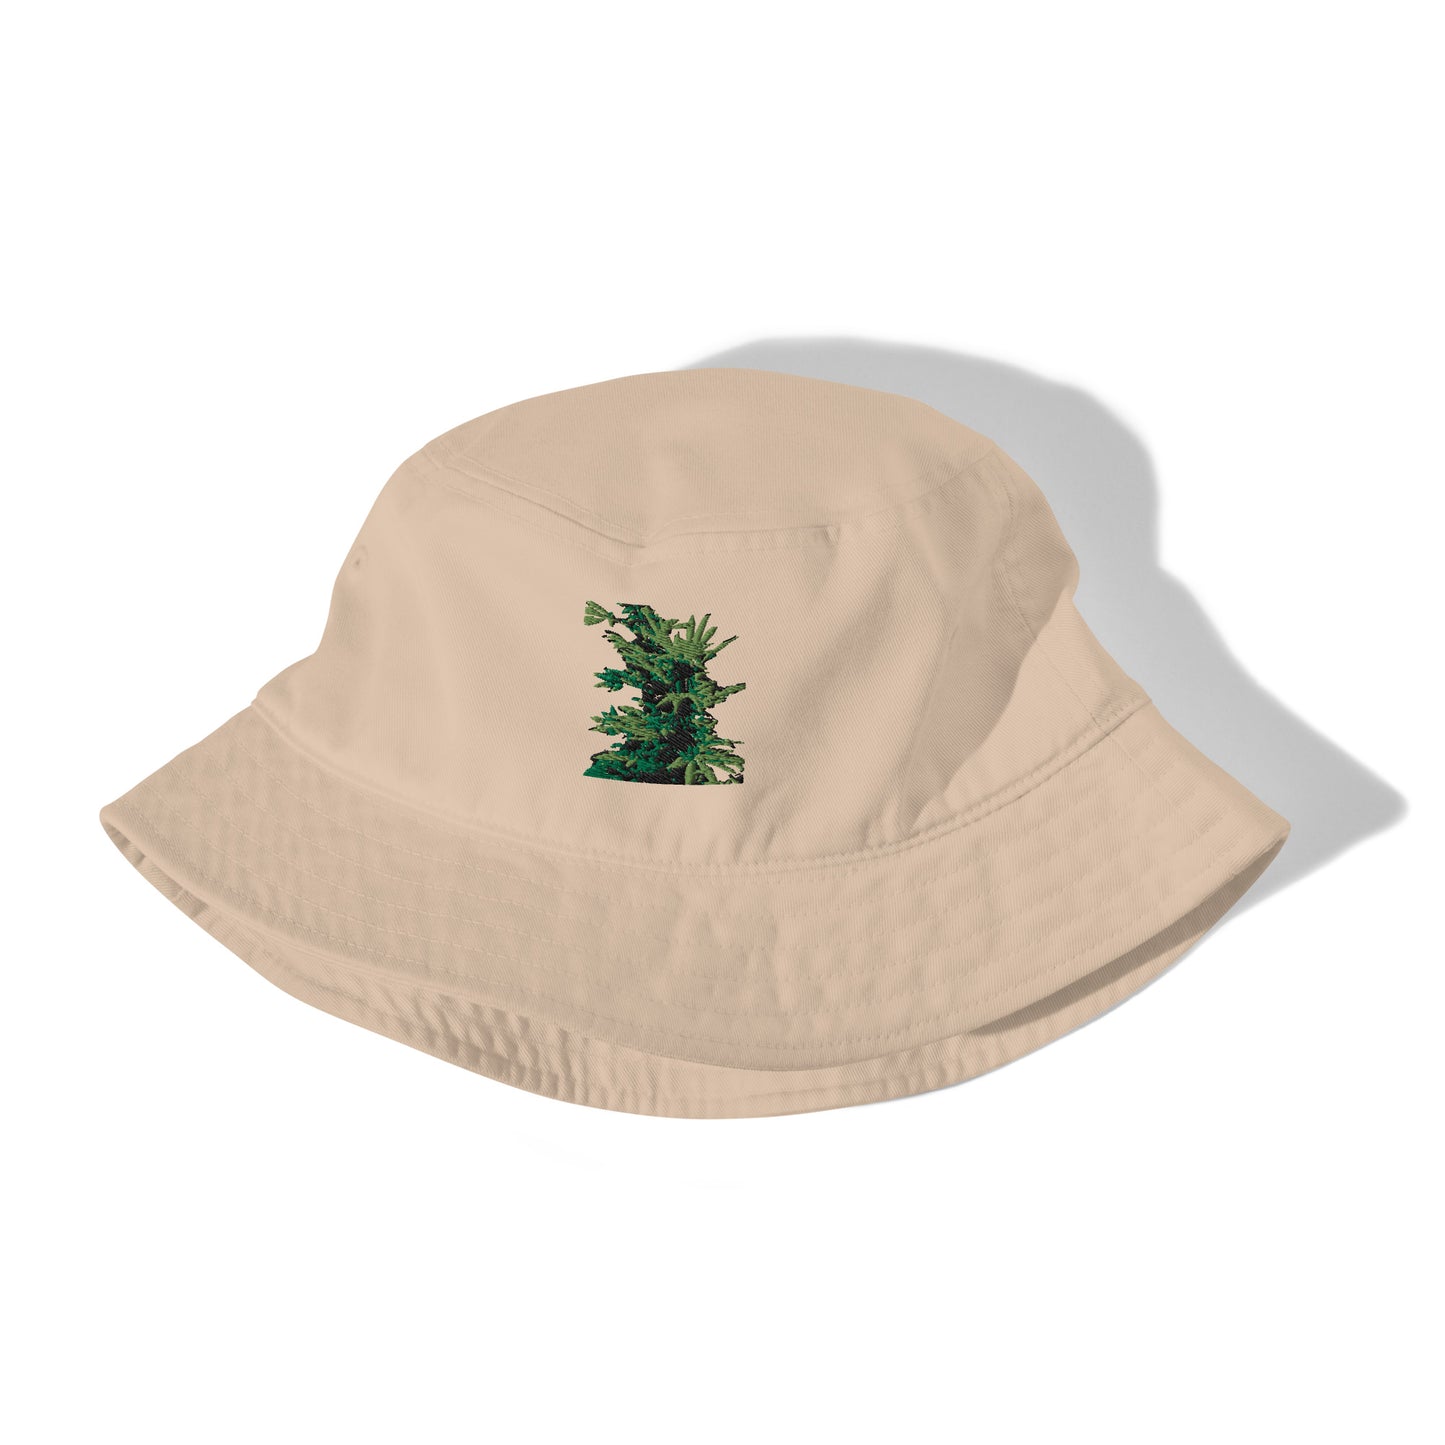 FZ Organic bucket hat - FZwear